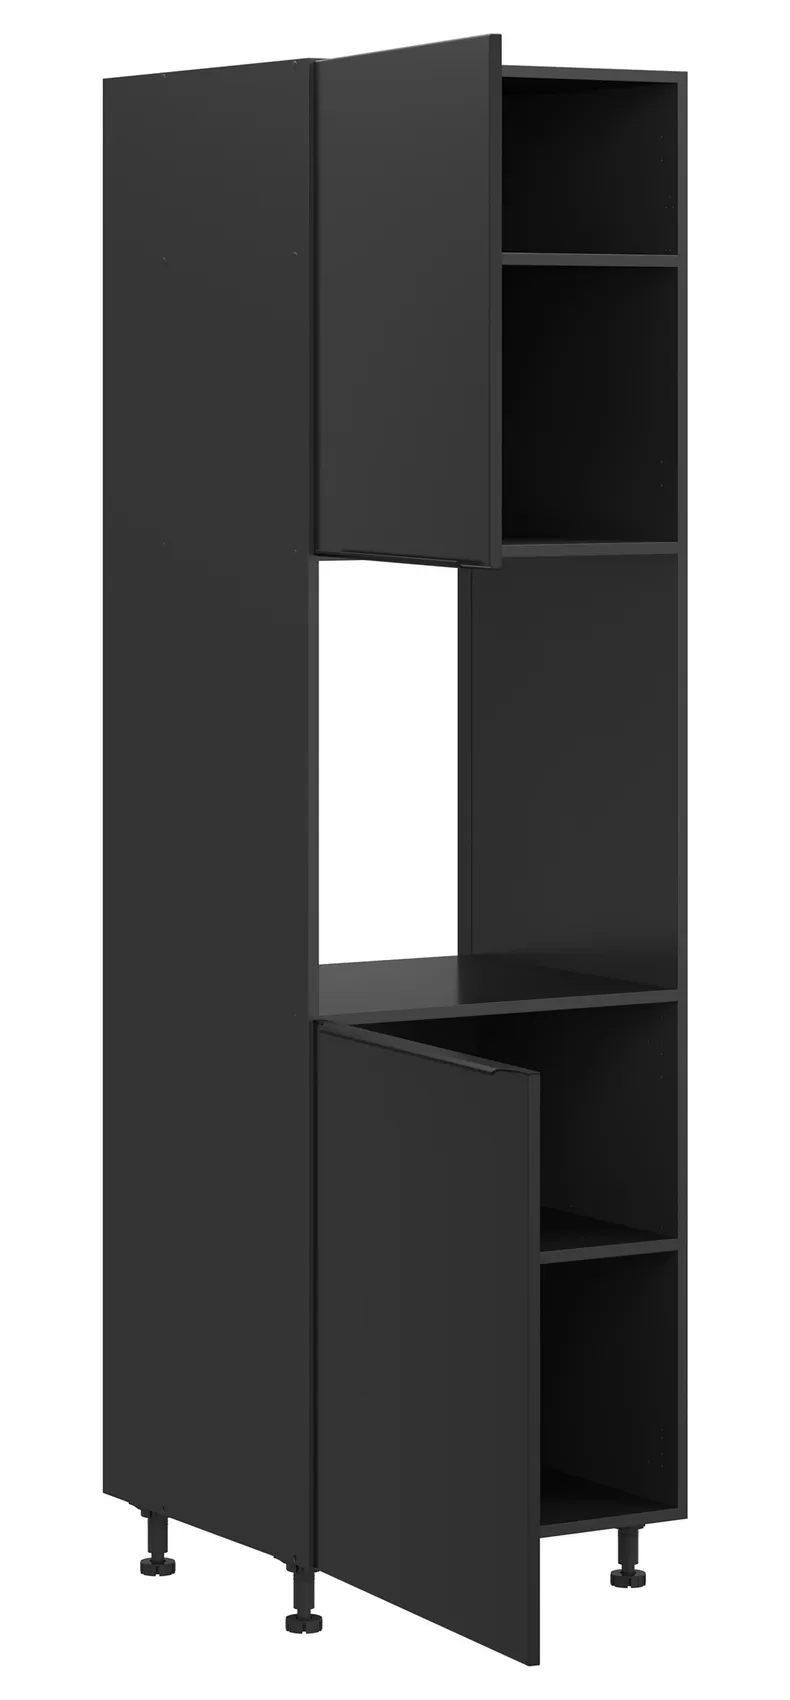 BRW Кухонный шкаф Sole L6 60 см левосторонний матовый черный, черный/черный матовый FM_DPS_60/207_L/L-CA/CAM фото №3